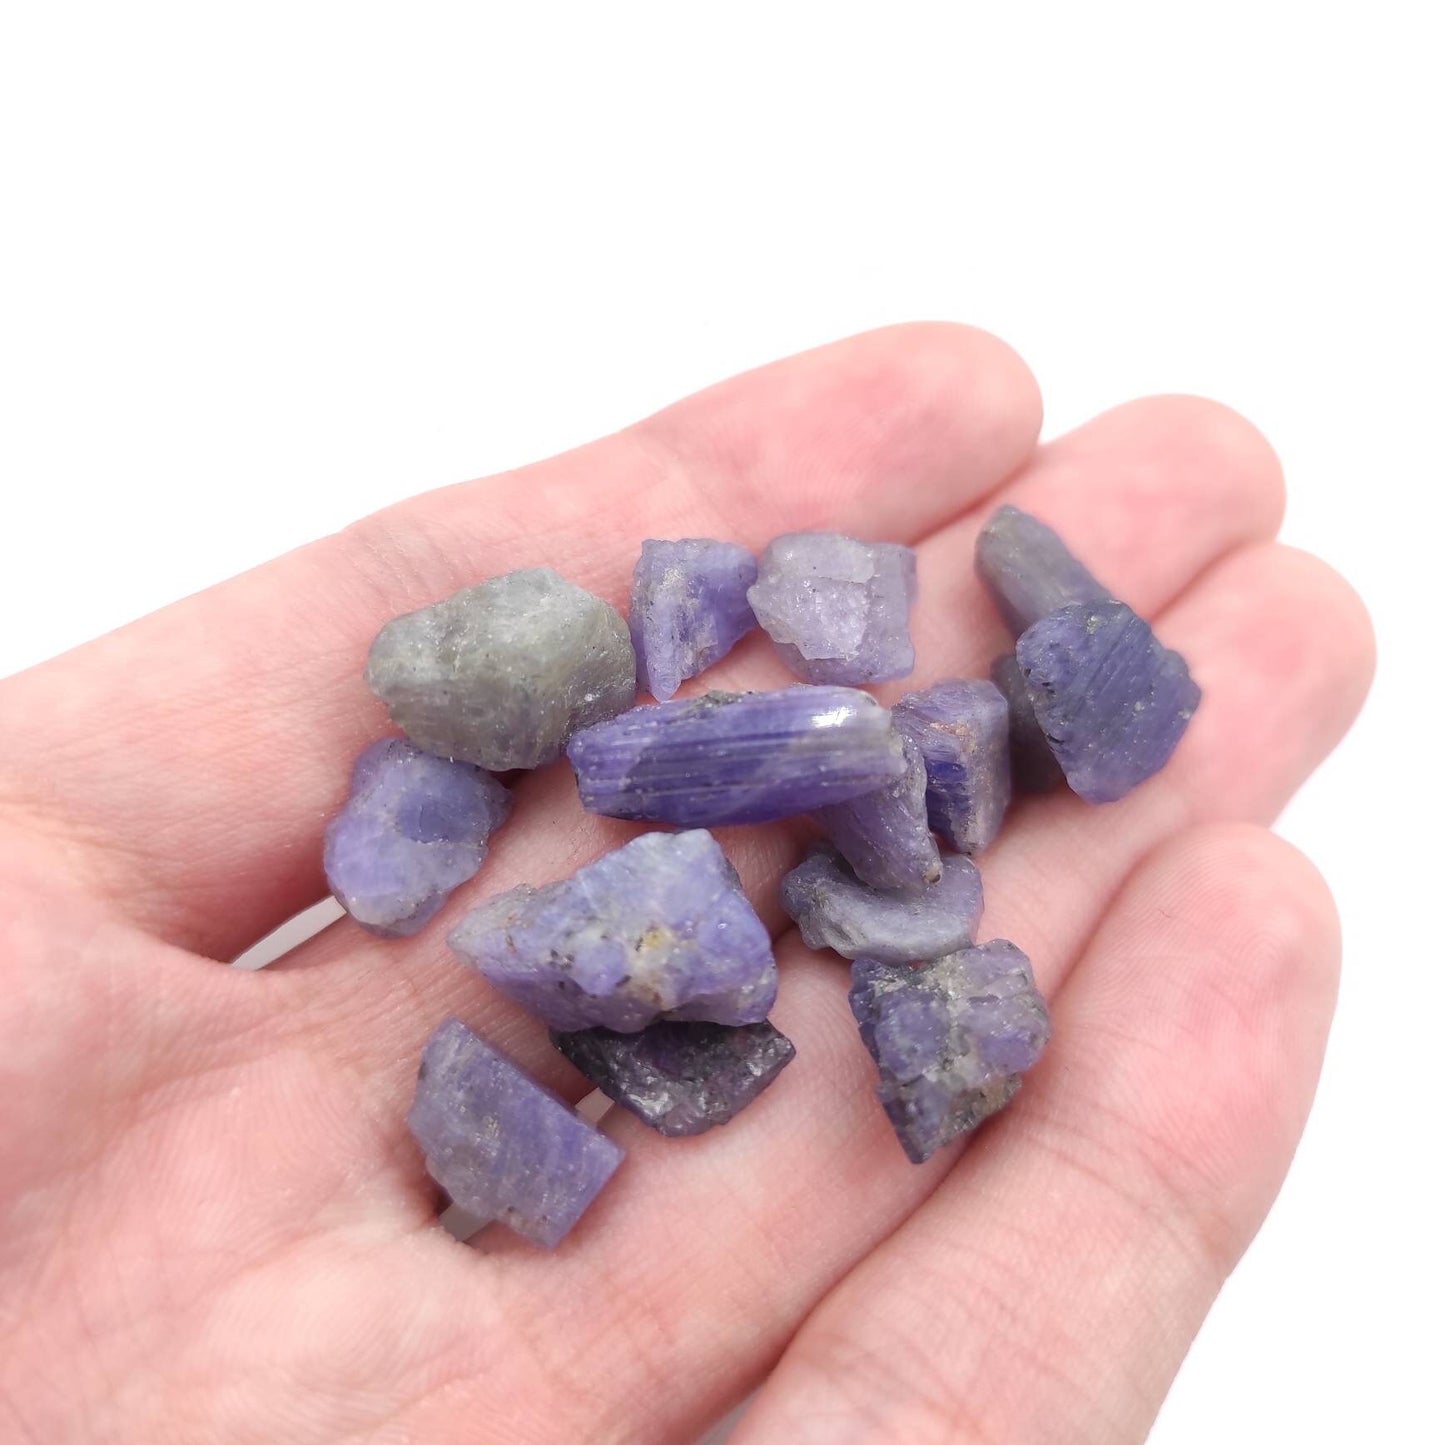 90ct Lot of 15pcs - Raw Tanzanite Gemstones - Rough Tanzanite Crystals - Heat Treated Tanzanite Loose Gems - Purple Tanzanite from Tanzania